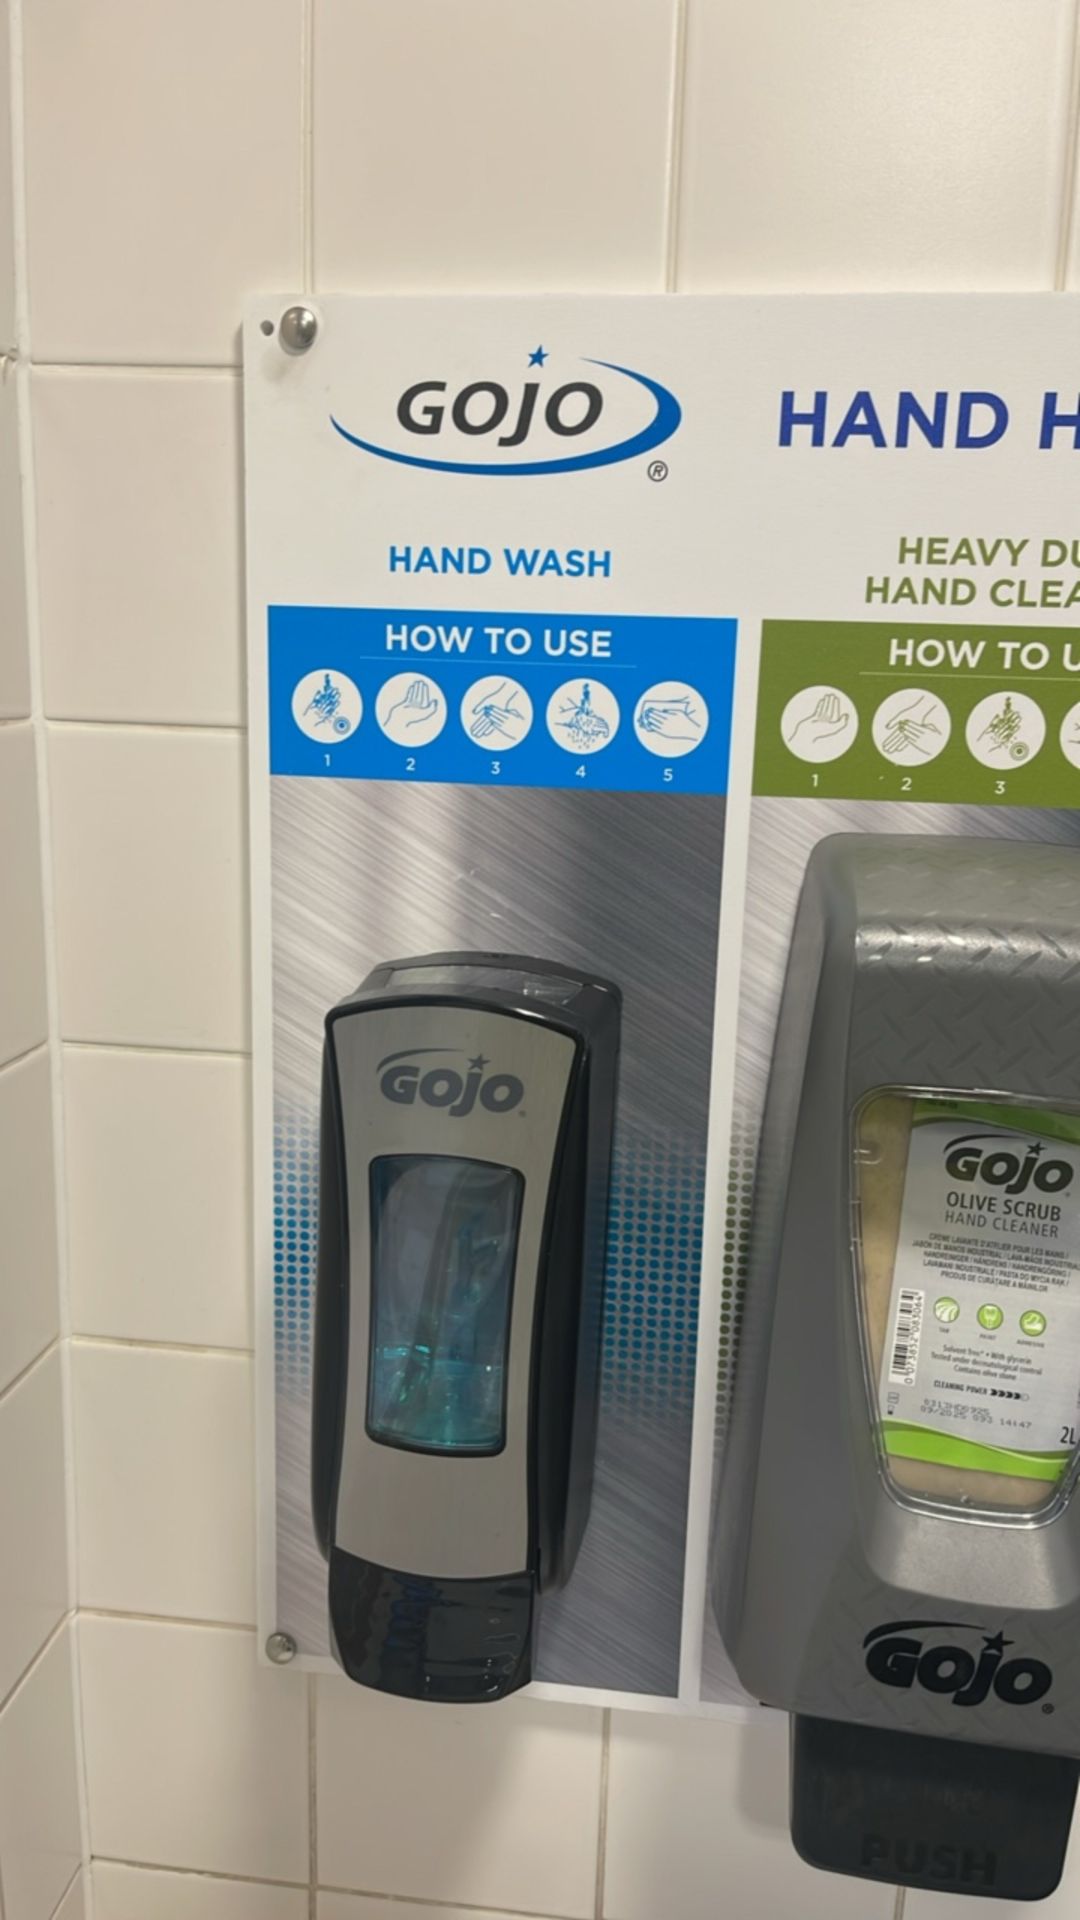 ref 563 - Hand Hygiene Station - Image 4 of 5